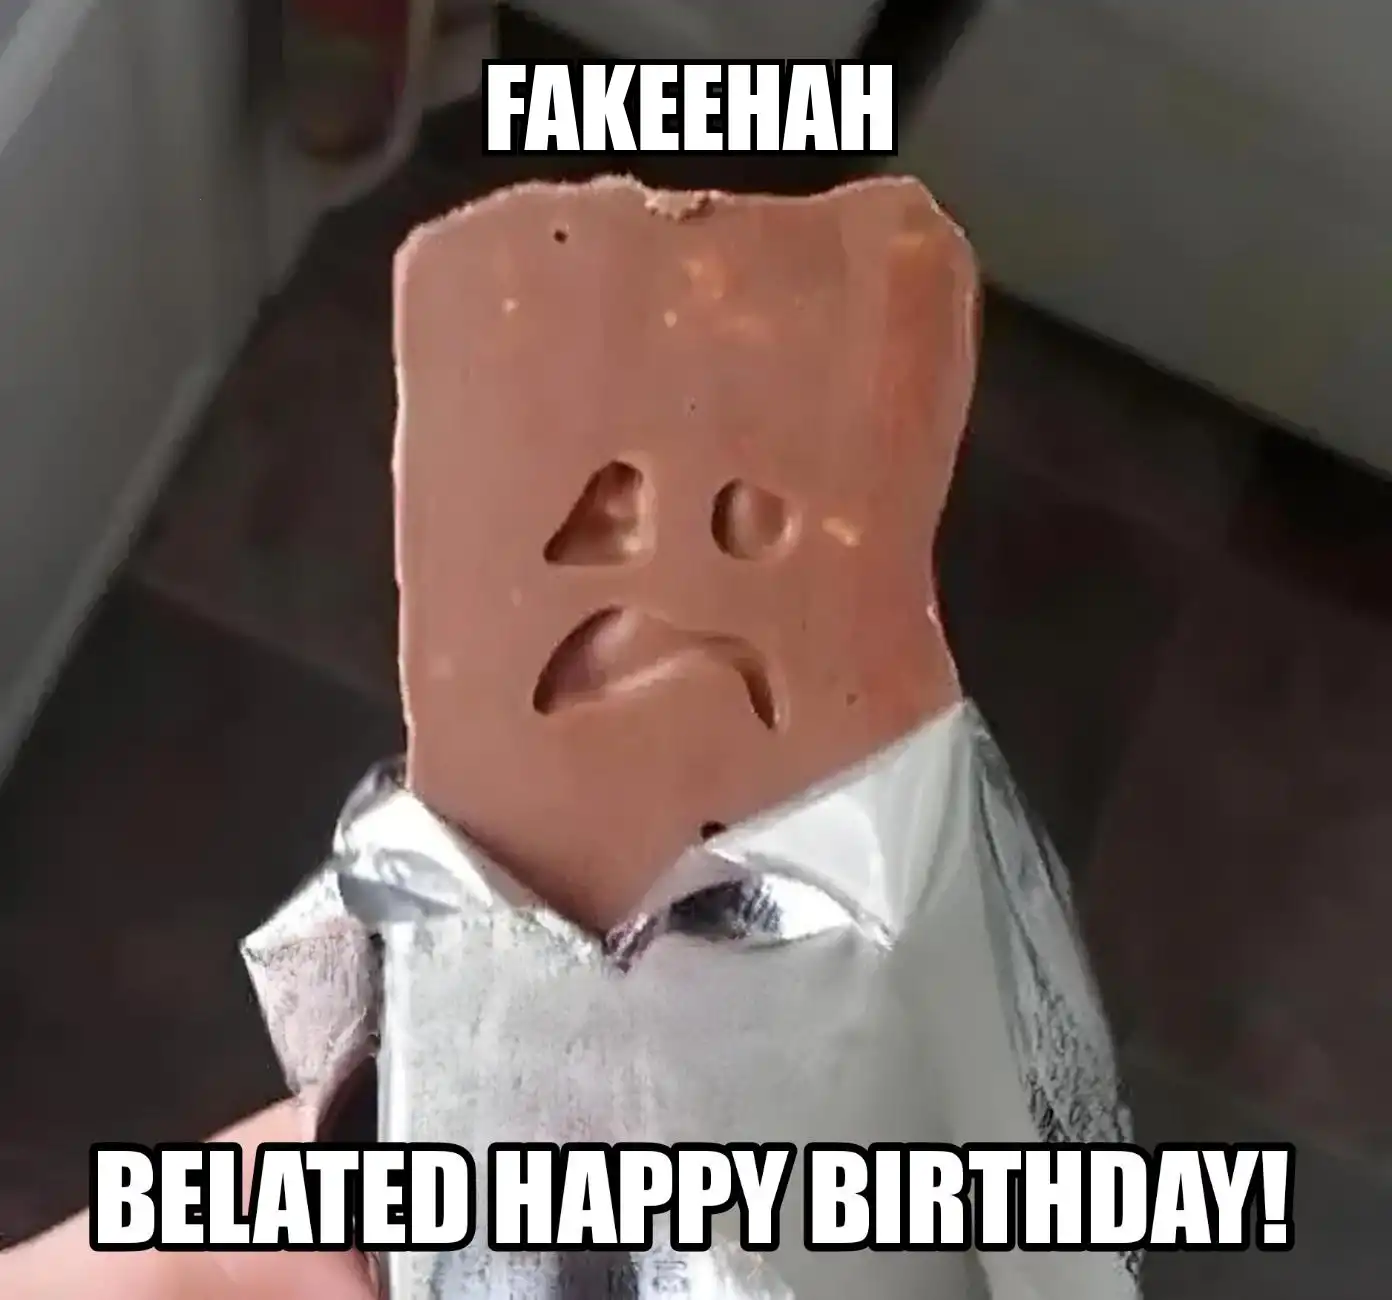 Happy Birthday Fakeehah Belated Happy Birthday Meme